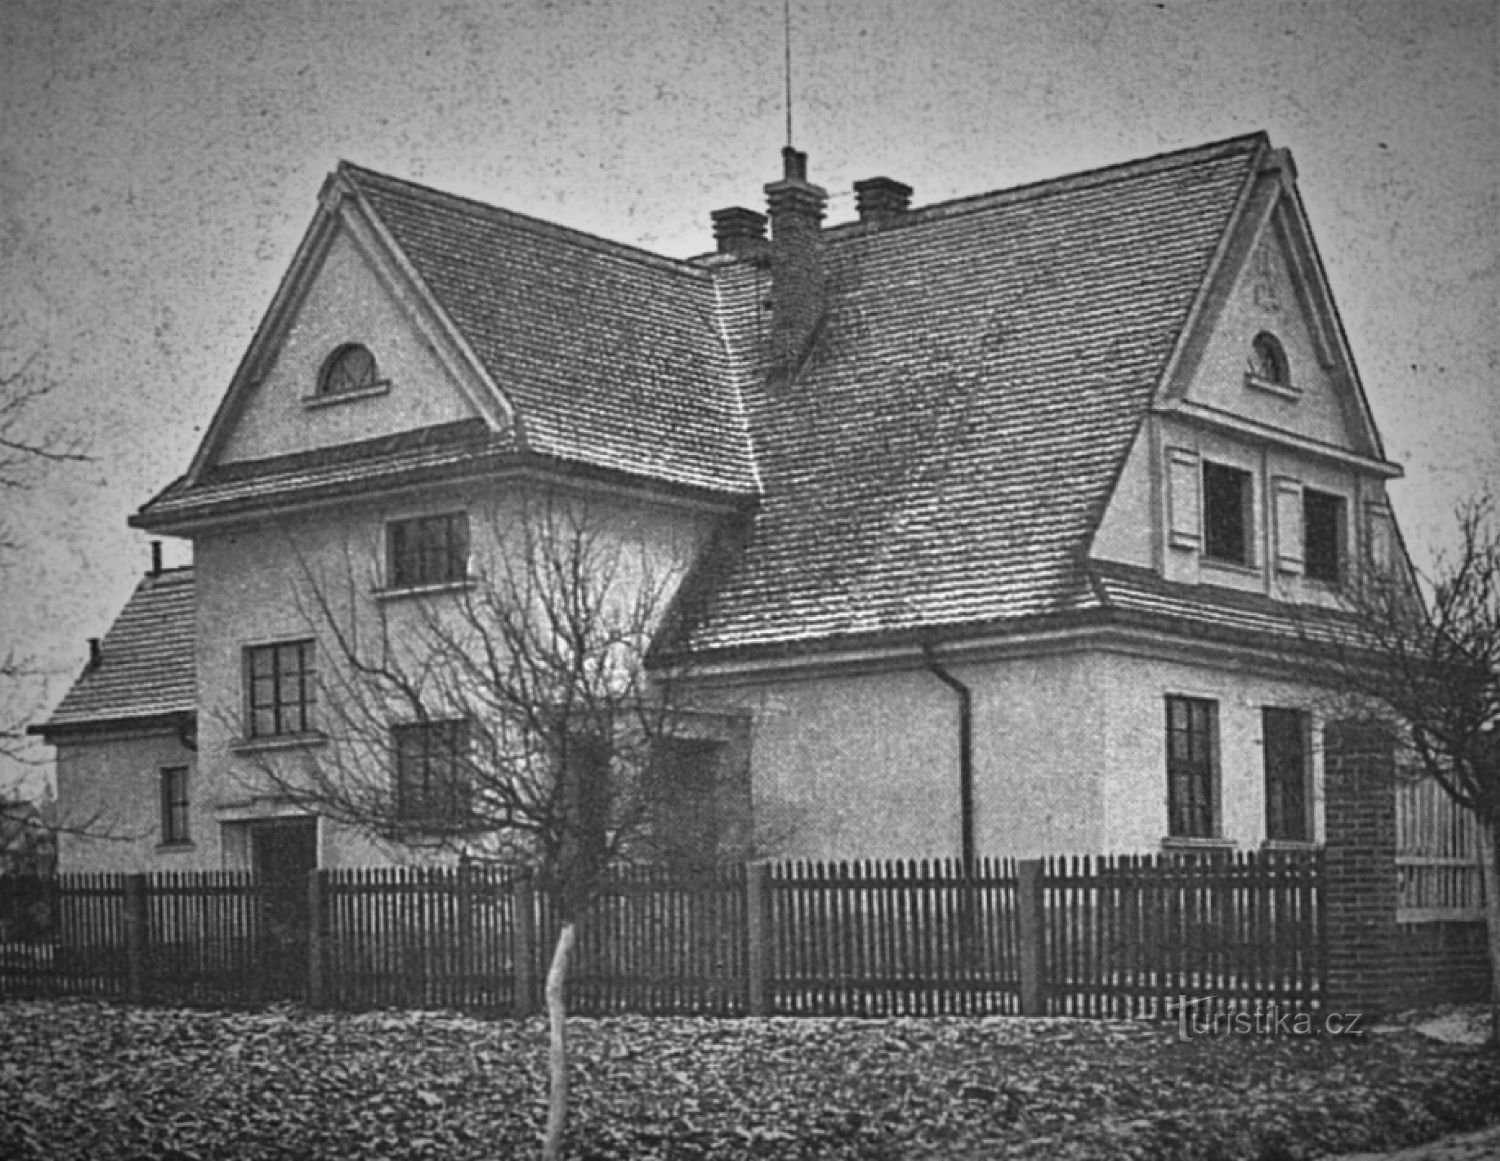 Masaryk's Czech Minority General School in Velká Bukovina in 1925